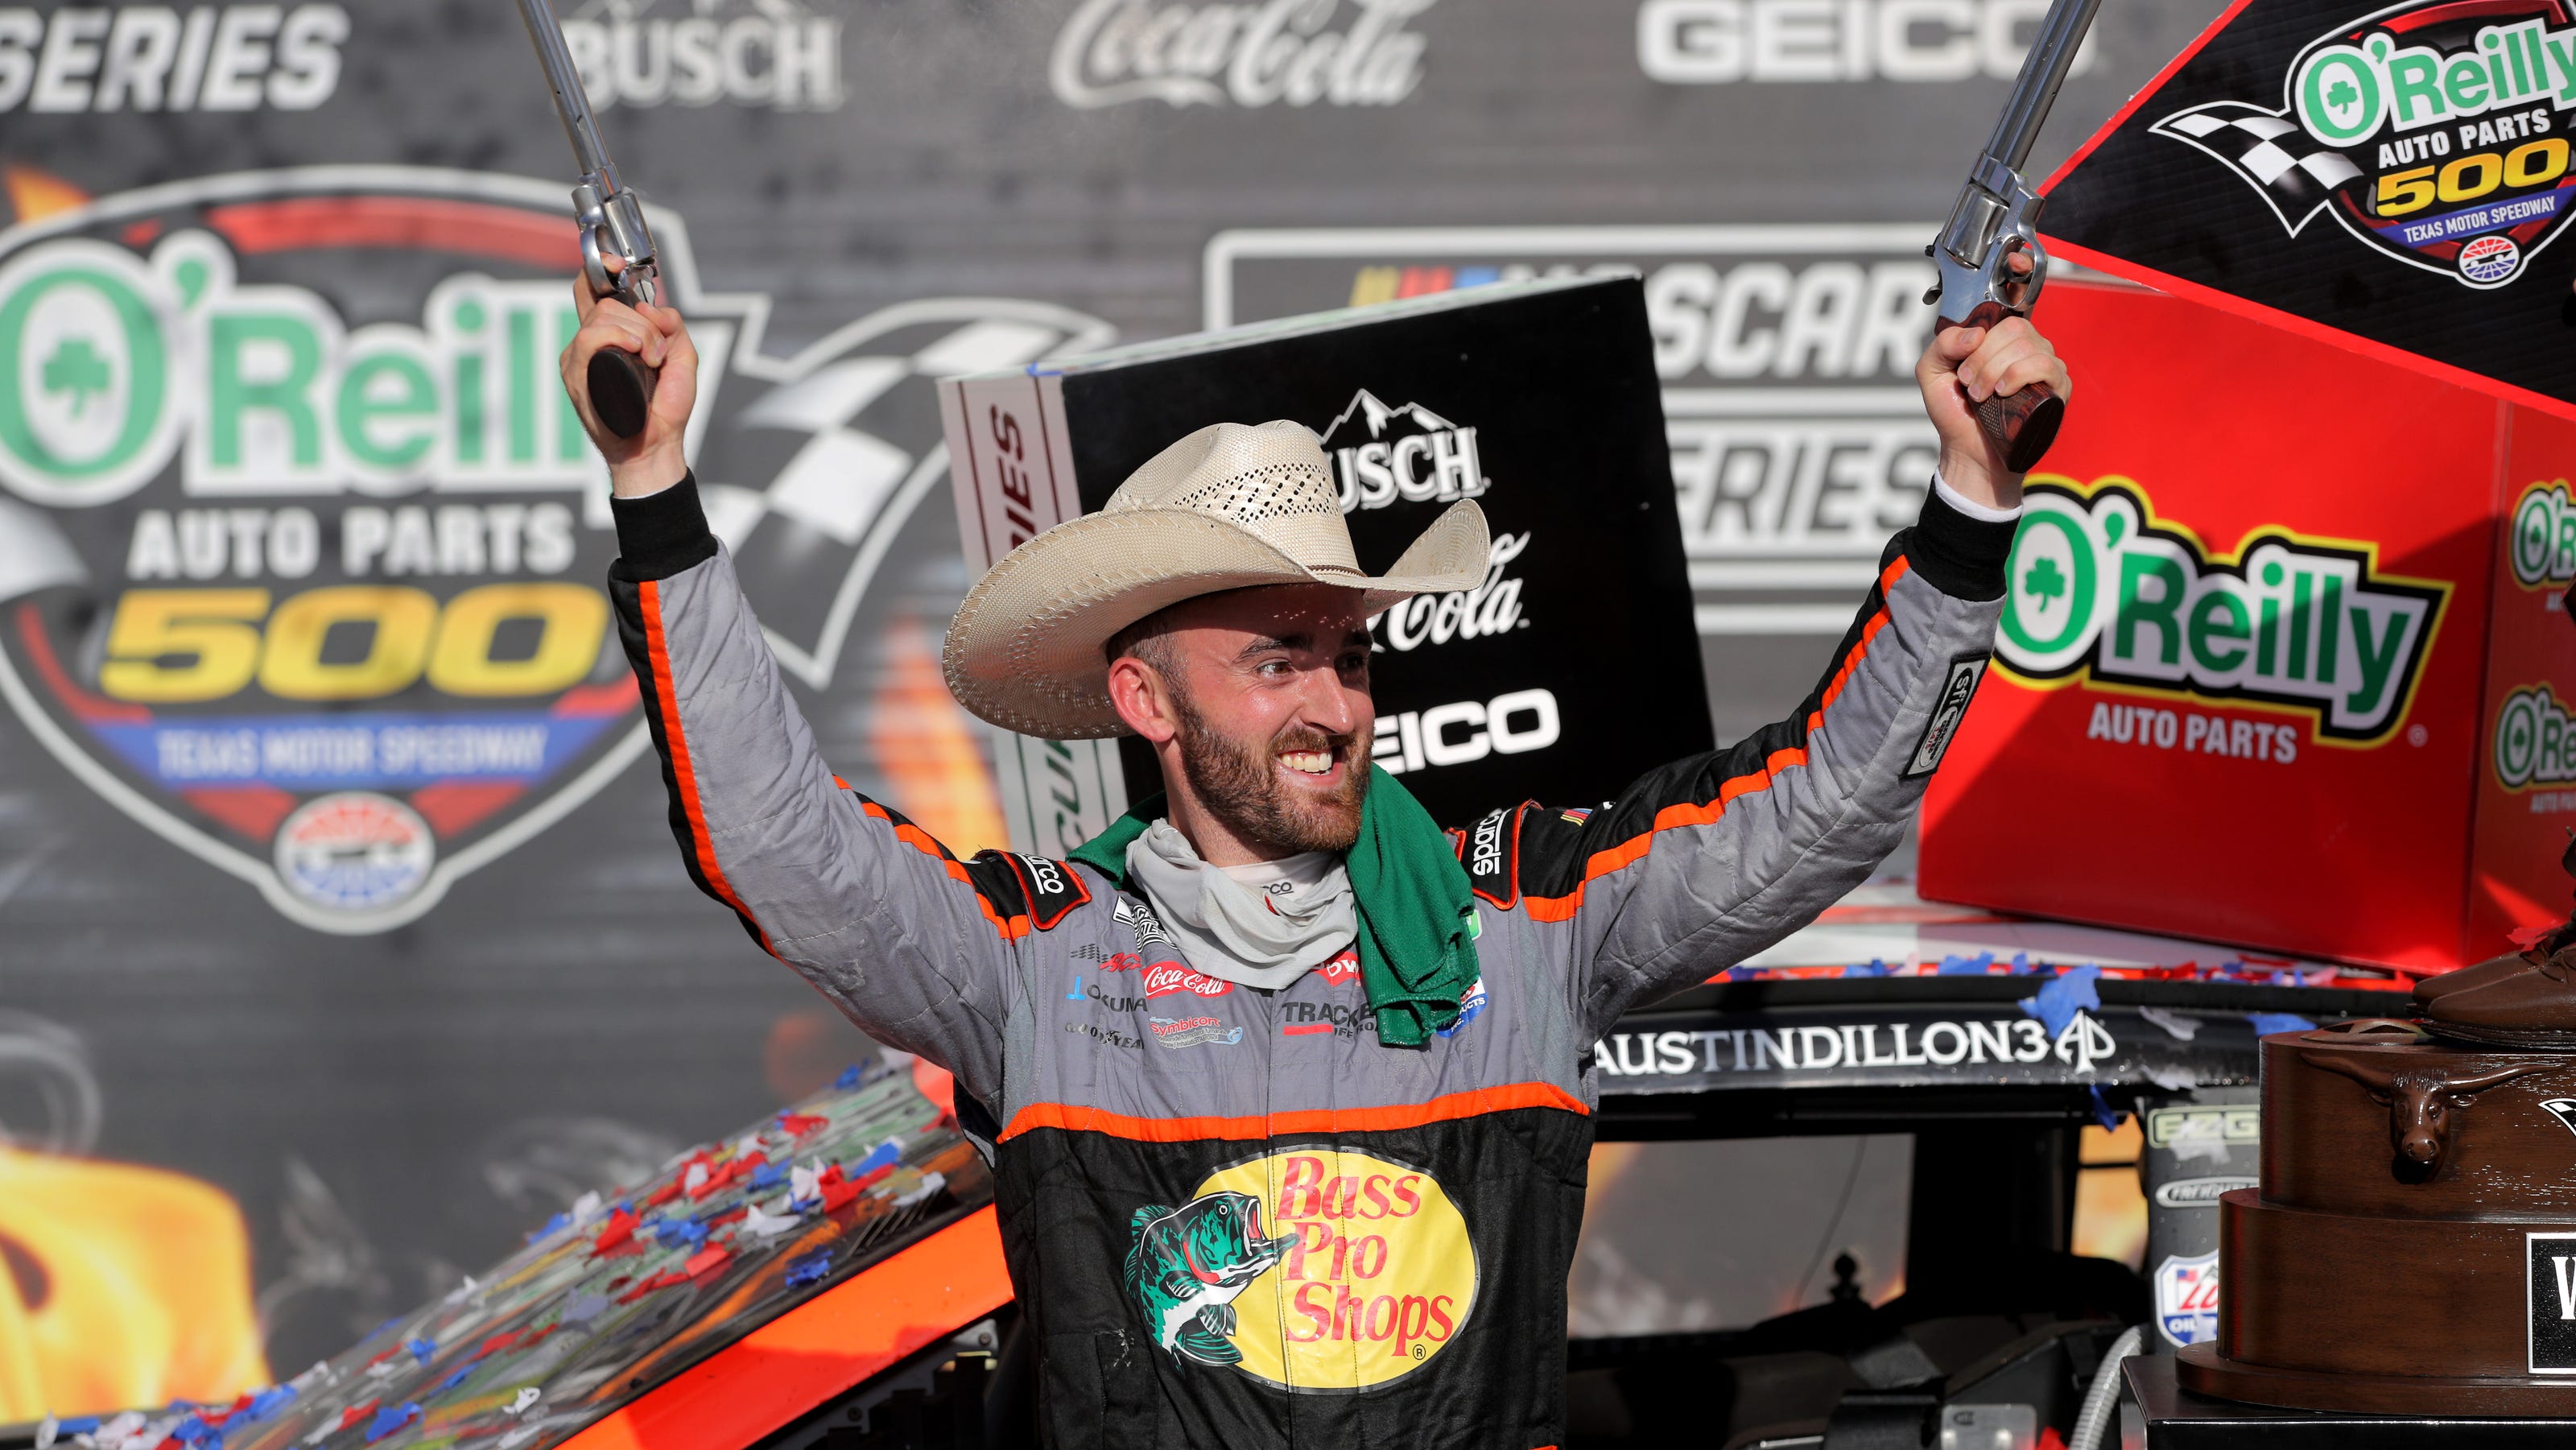 Austin Dillon wins NASCAR Texas Cup race in 12 finish for RCR